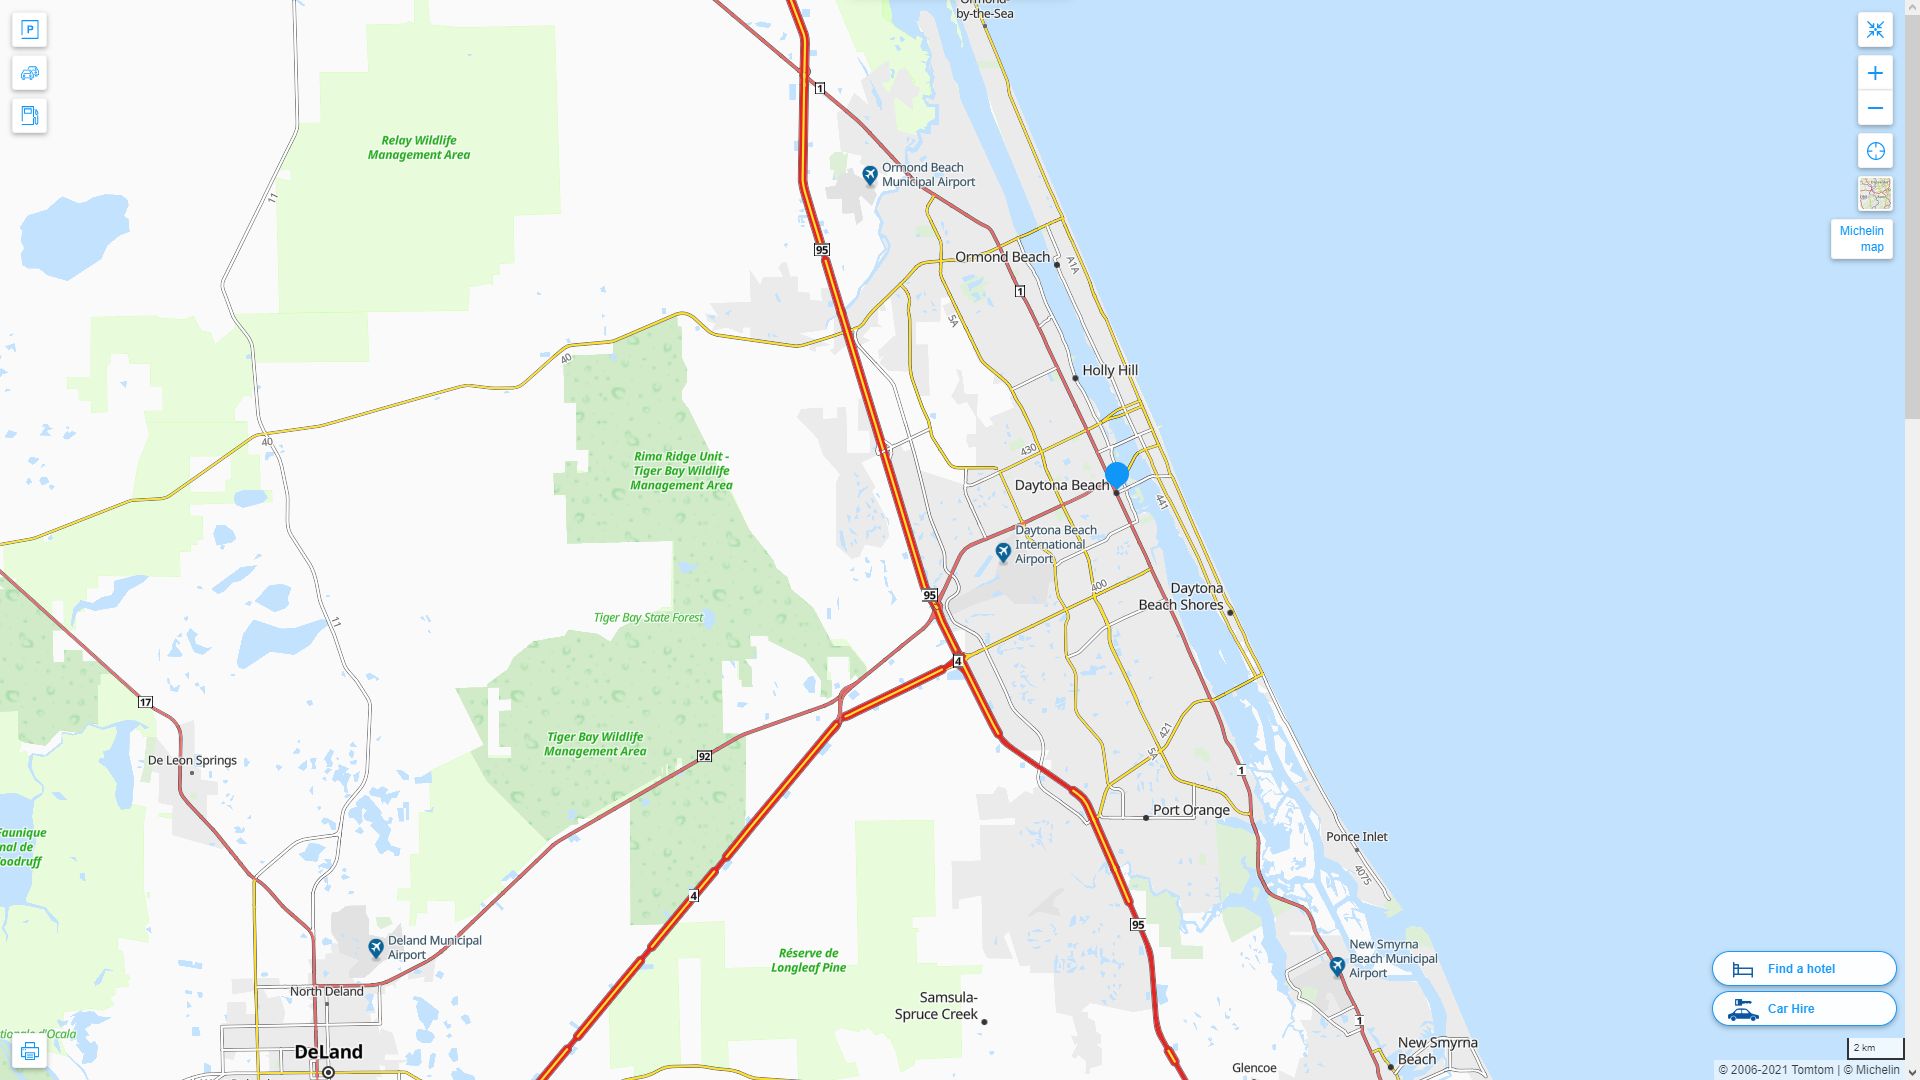 Daytona Beach Florida Highway and Road Map